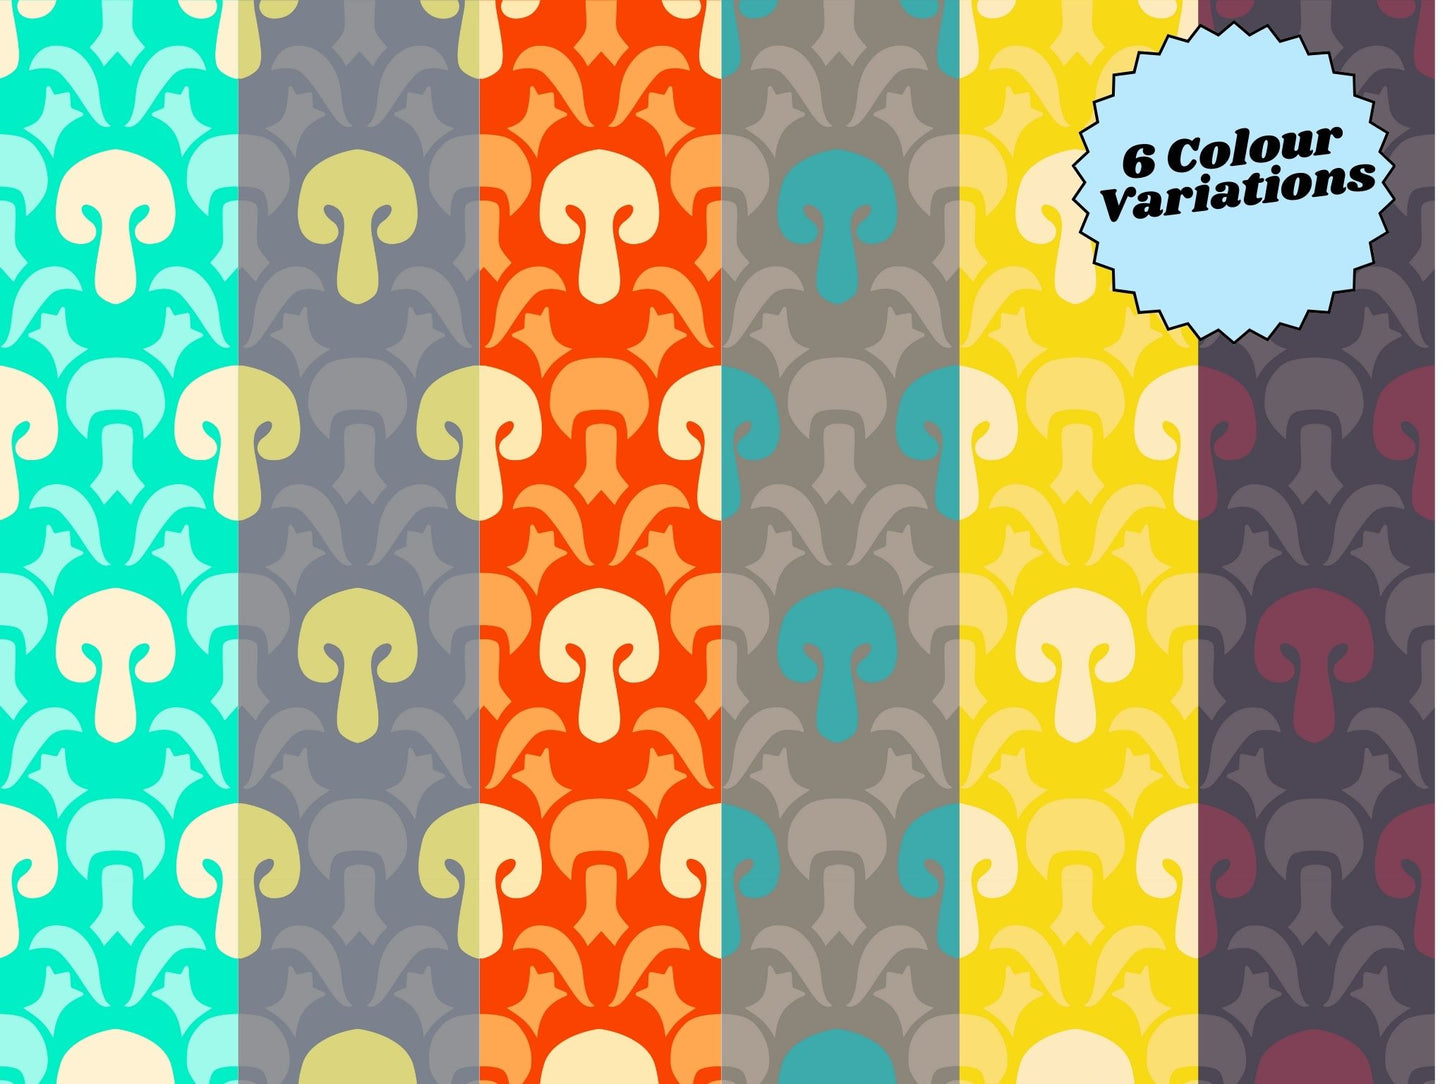 Cece's Mushroom Pattern Custom Printed Cosplay Fabric | Inspired by the Tearful Kingdom